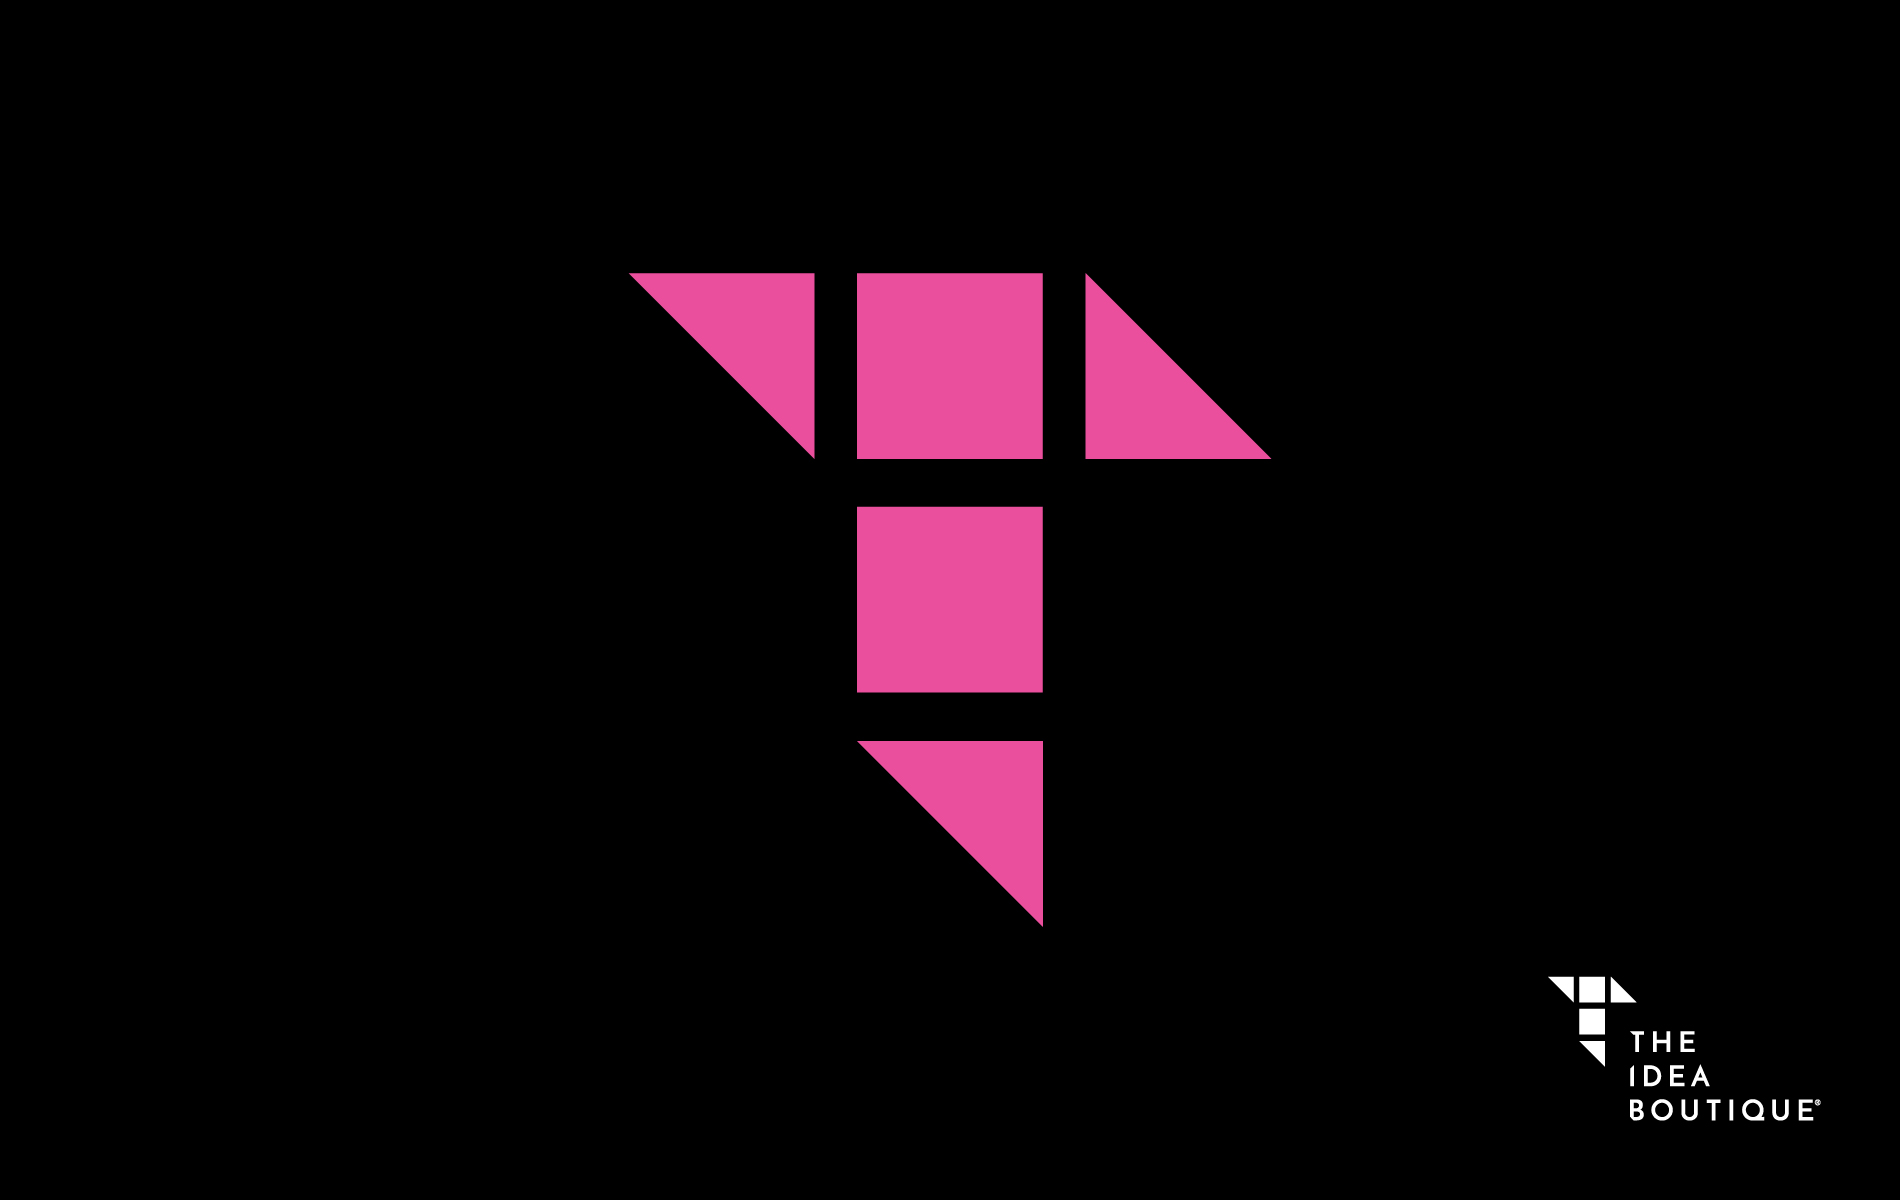 The Idea Boutique 2020 Rebrand logo and T logo mark